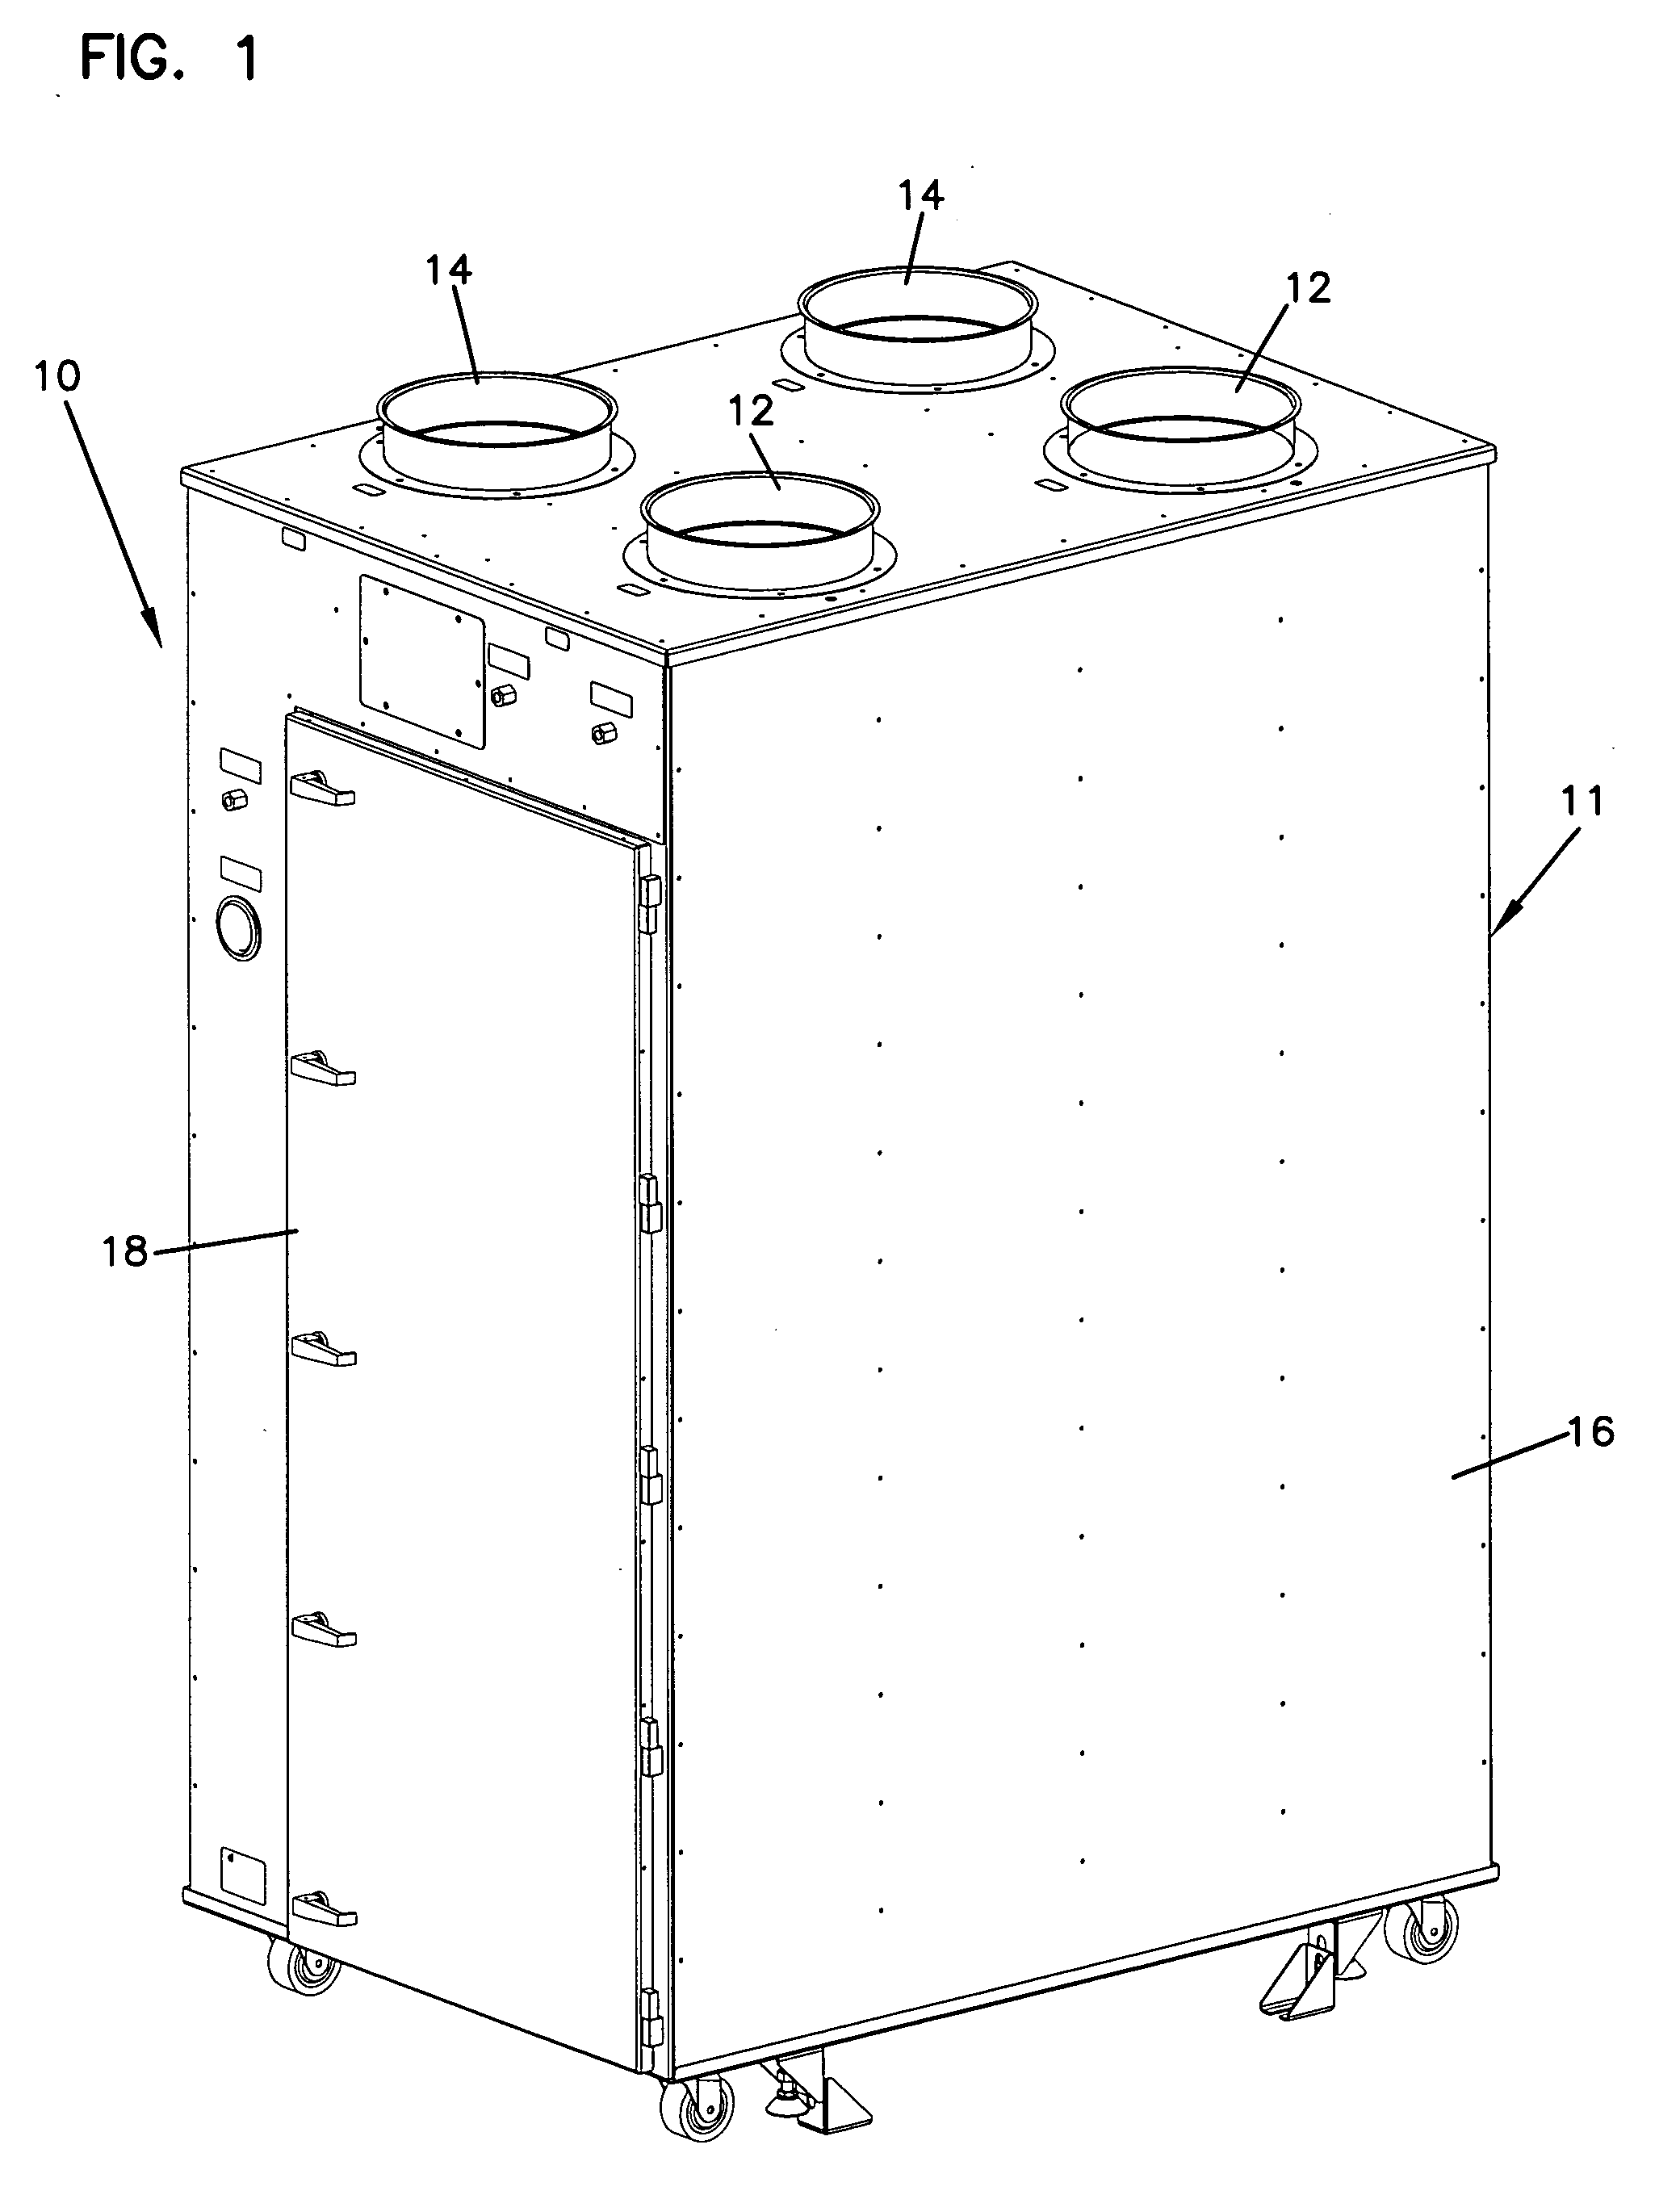 Rigid adsorption apparatus, and methods